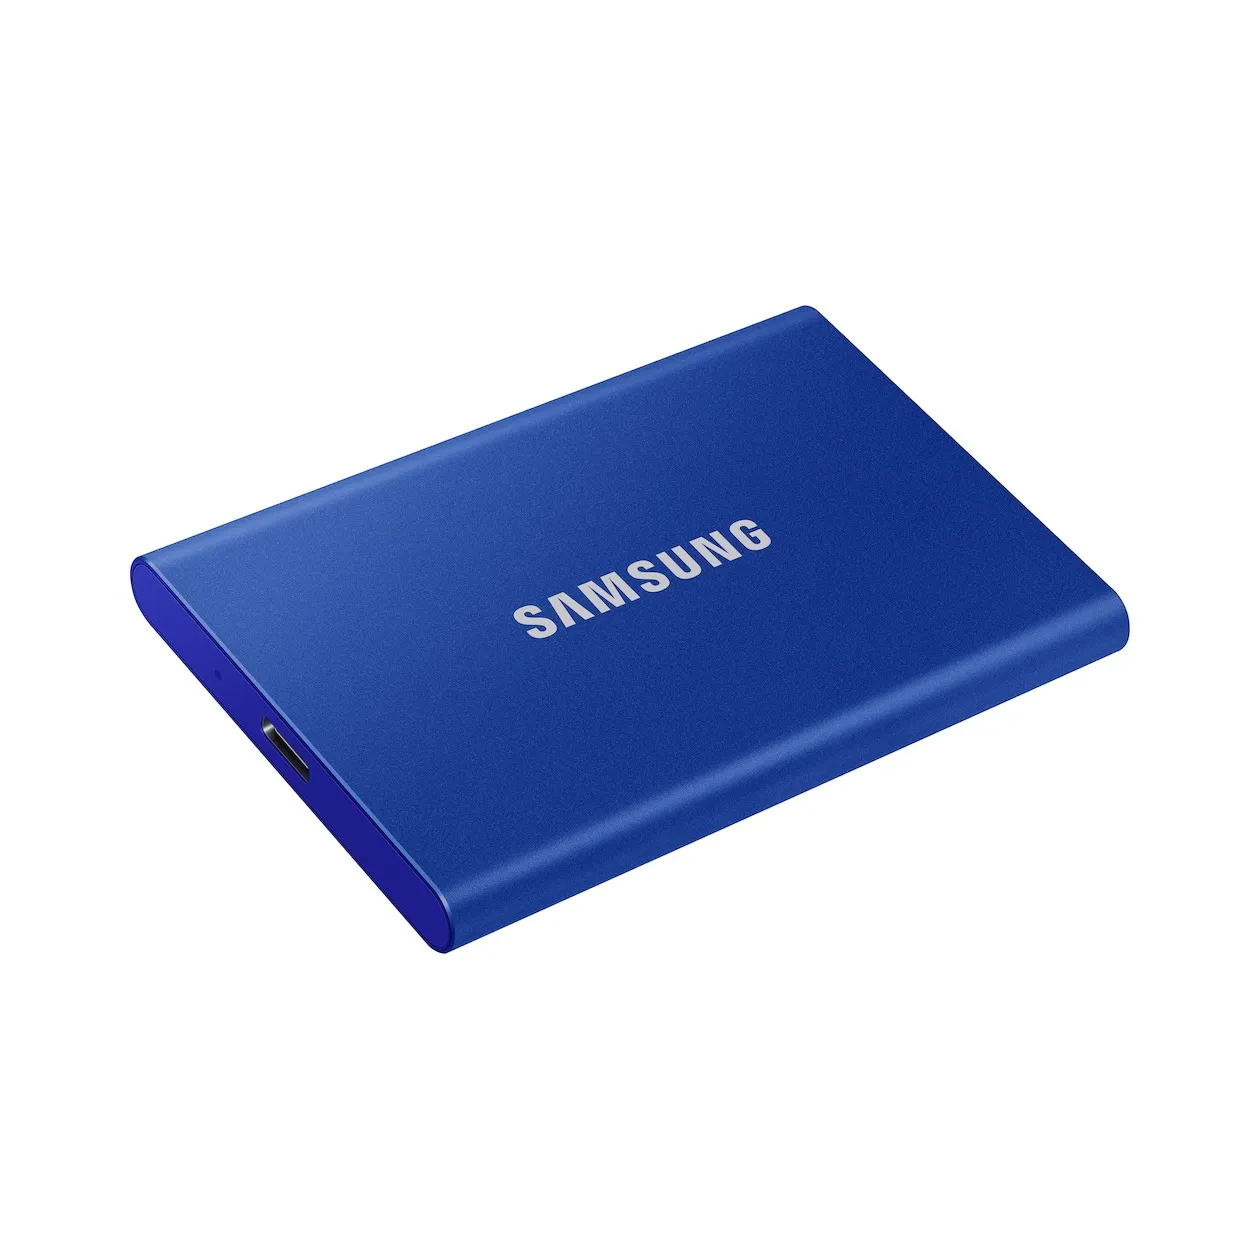 Samsung Portable SSD T7 2TB Blauw